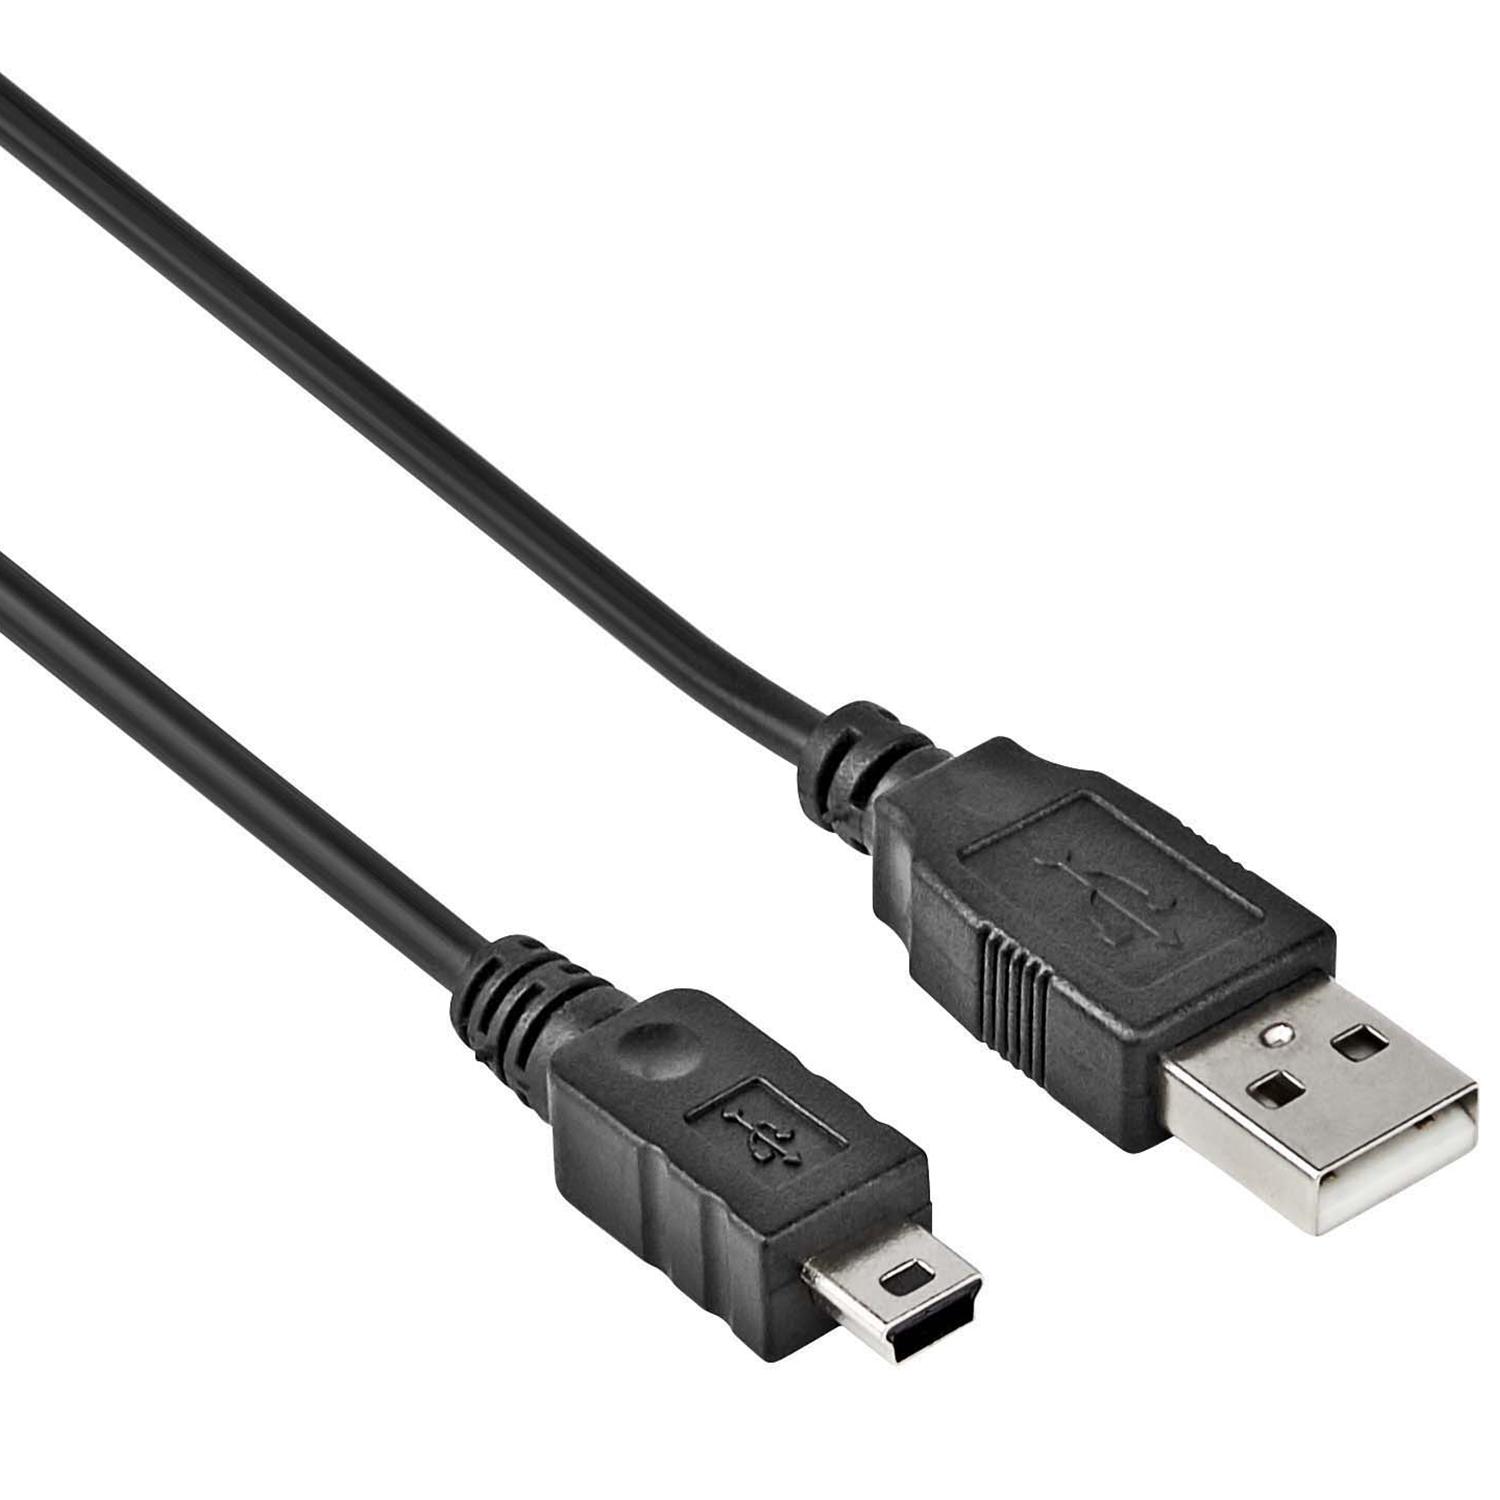 Mini USB 2.0 Kabel - Allteq